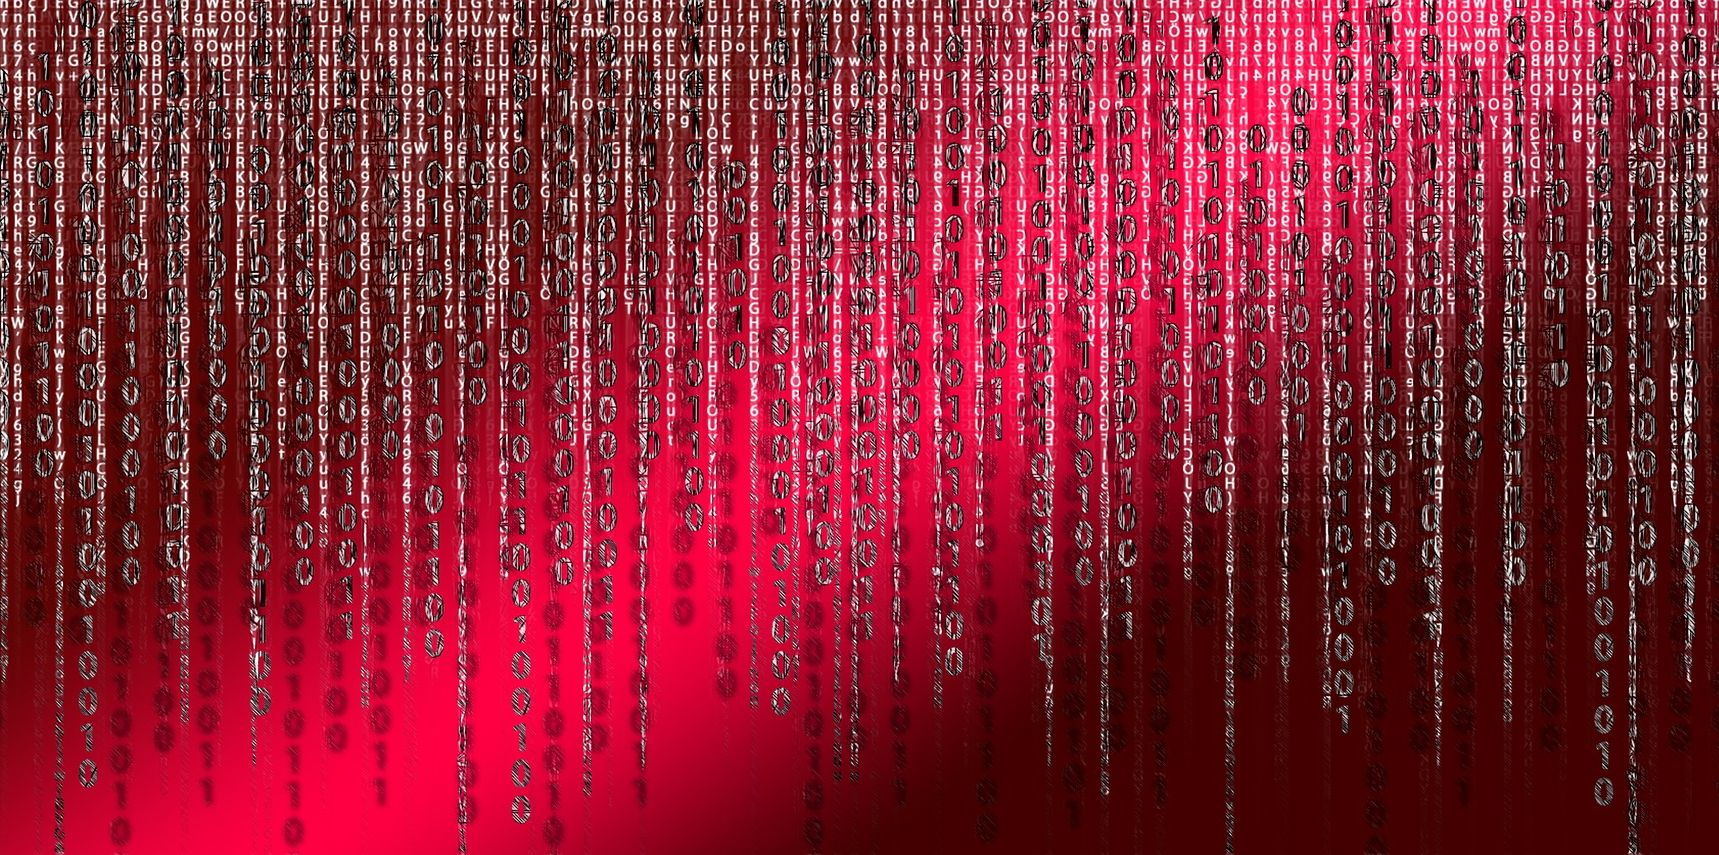 red digital graphic of matrix code